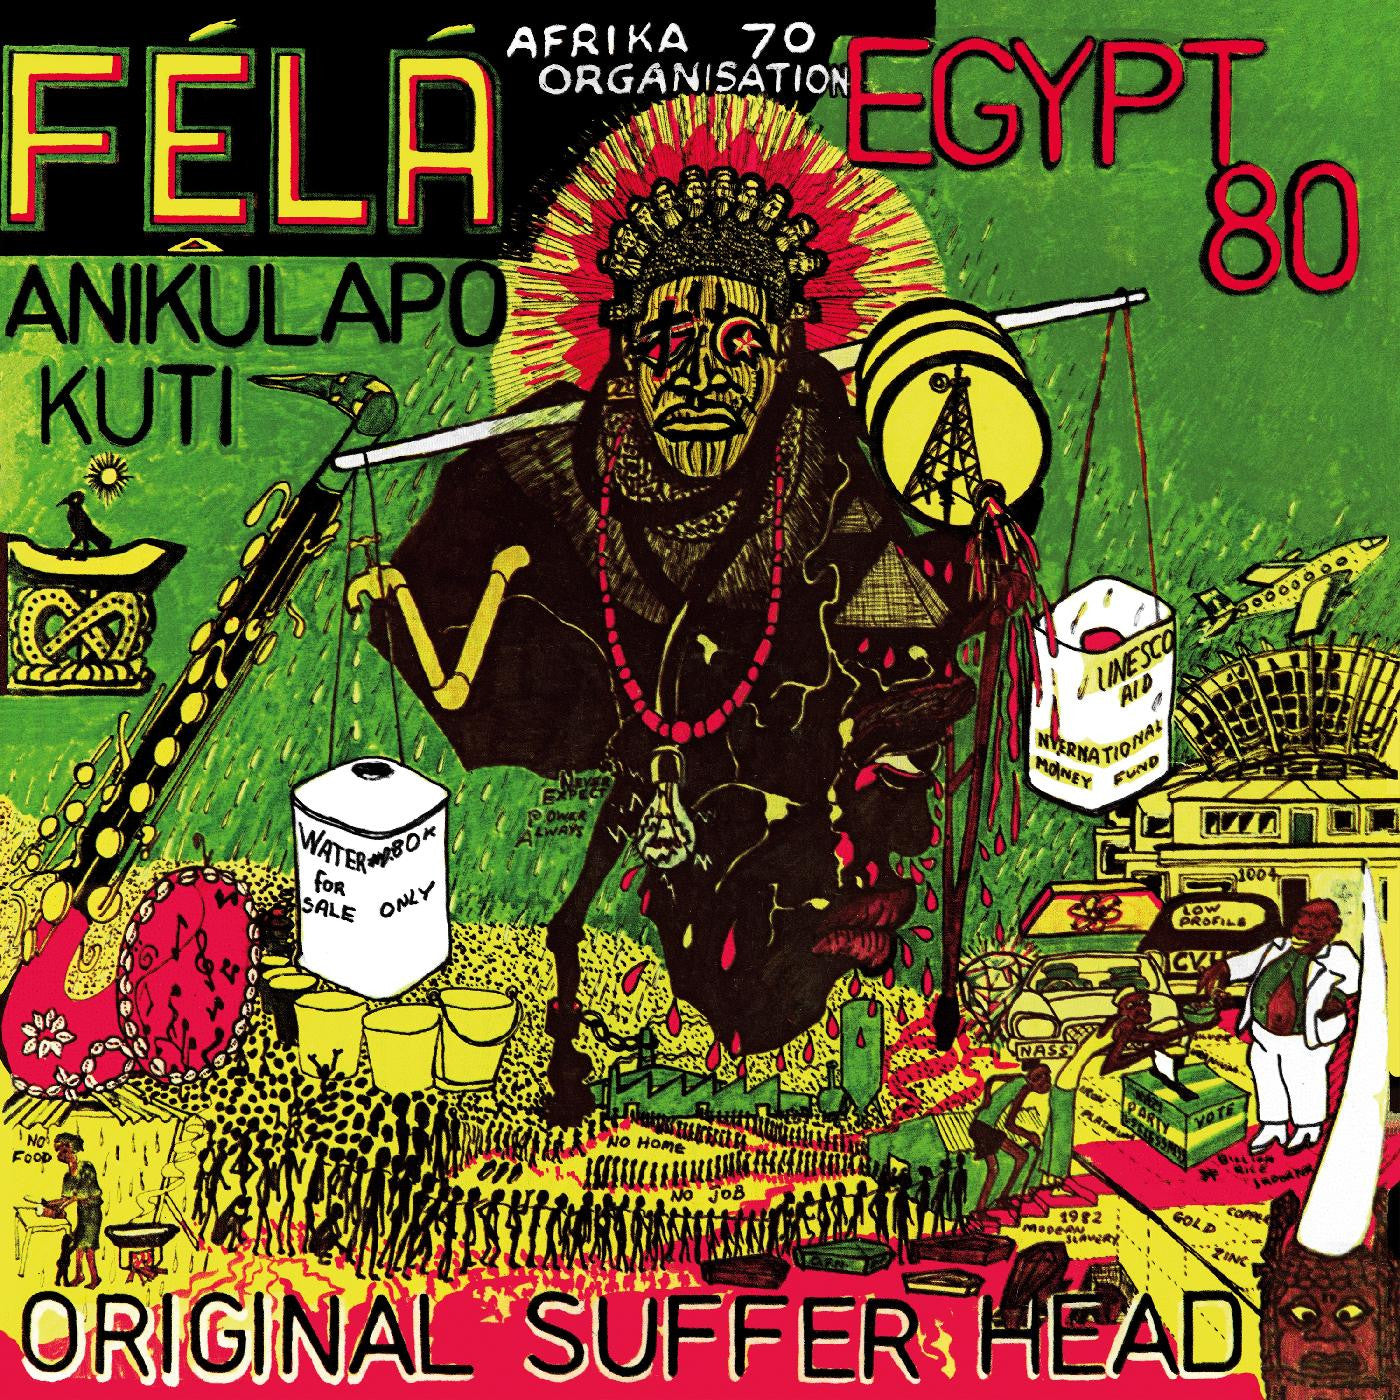 Fela Kuti & Egypt 80 - Original Sufferhead LP